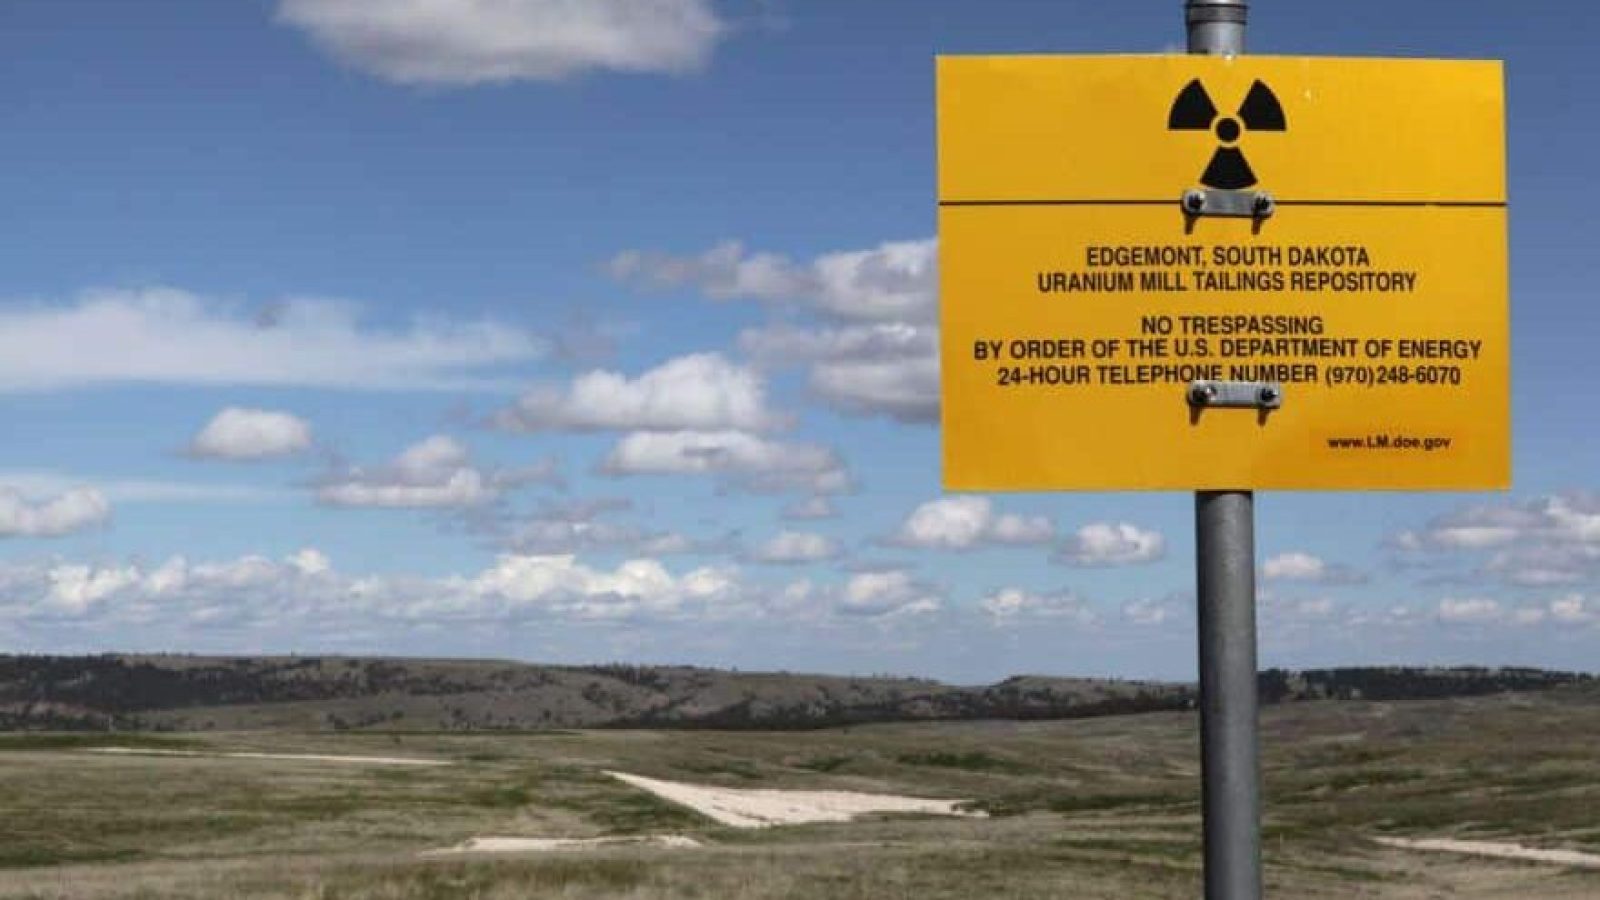 A warning sign for radiation contamination